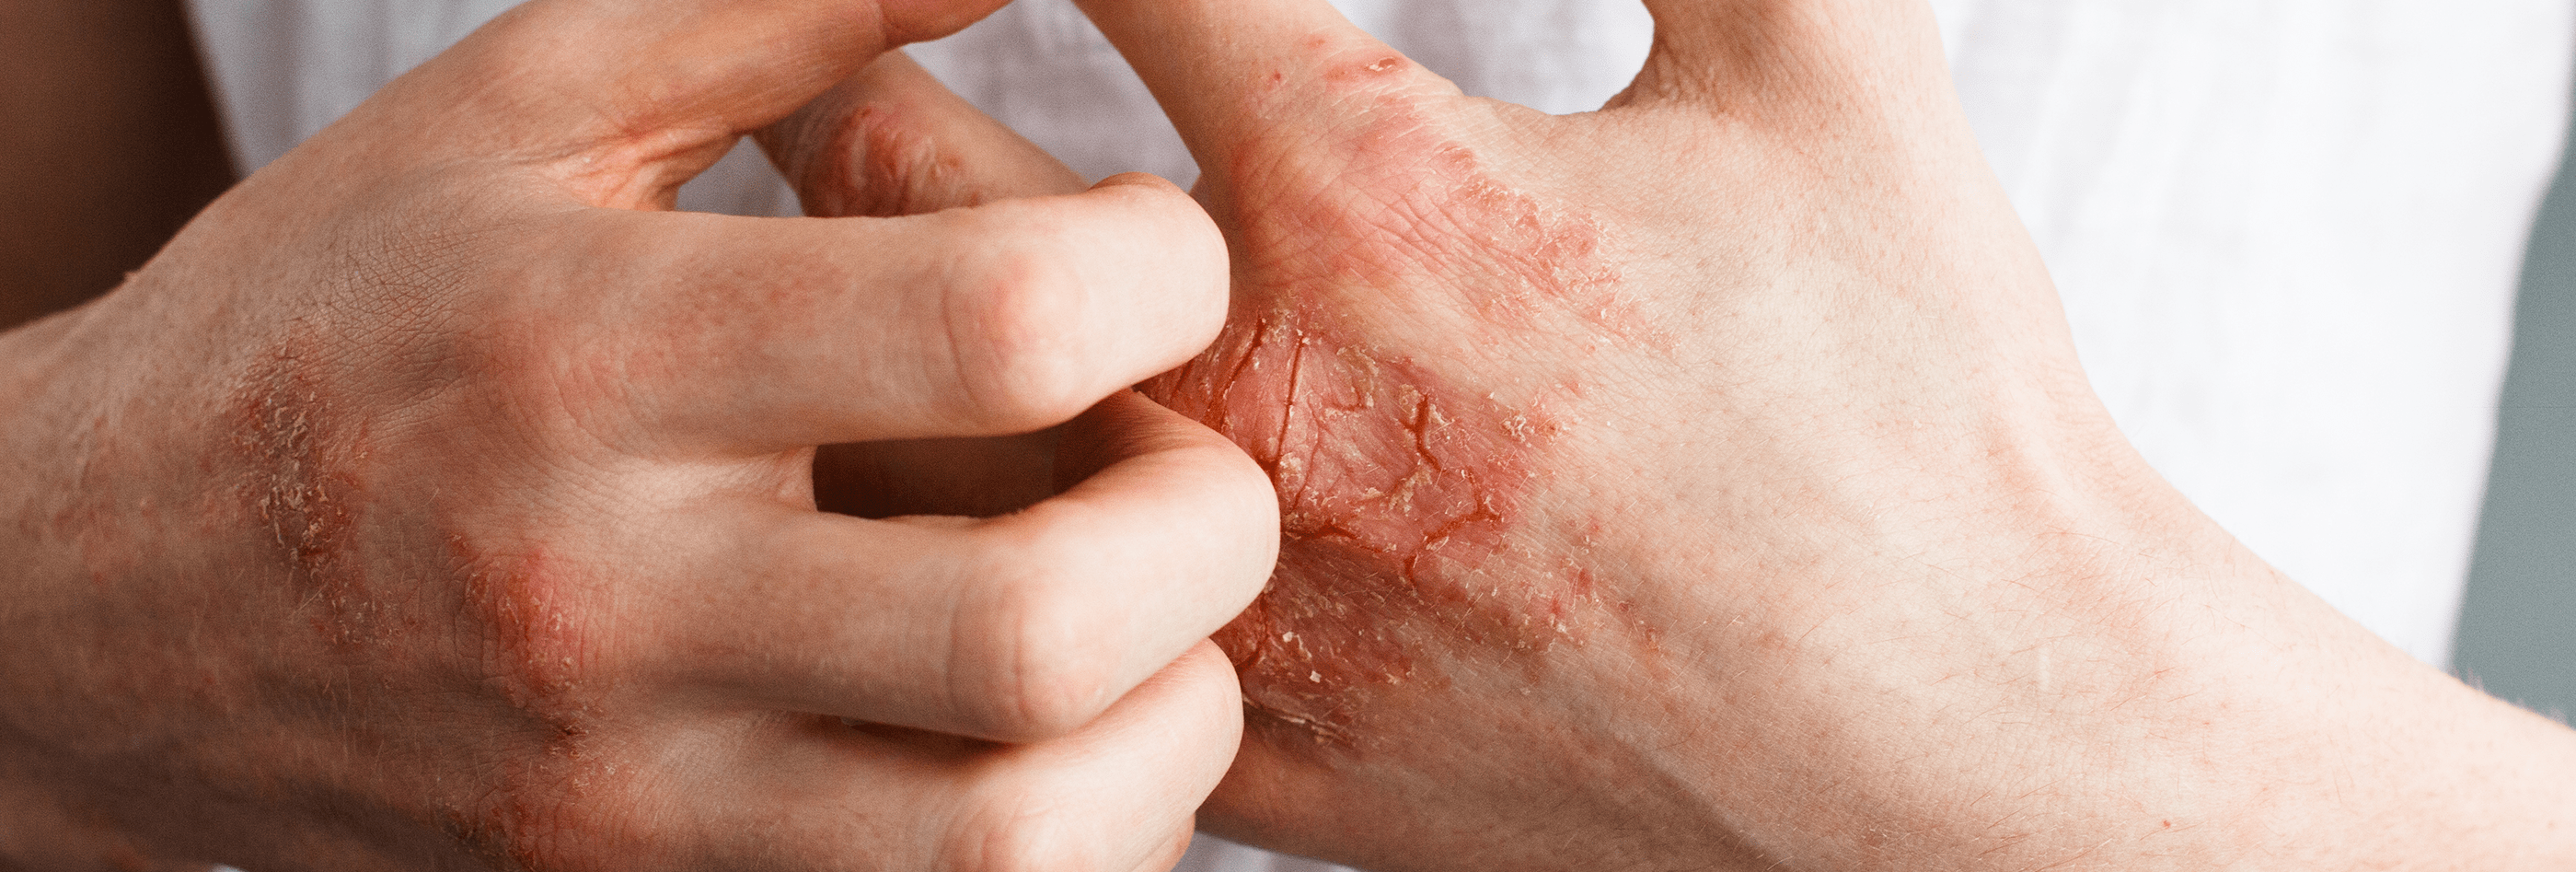  Eczema on hands